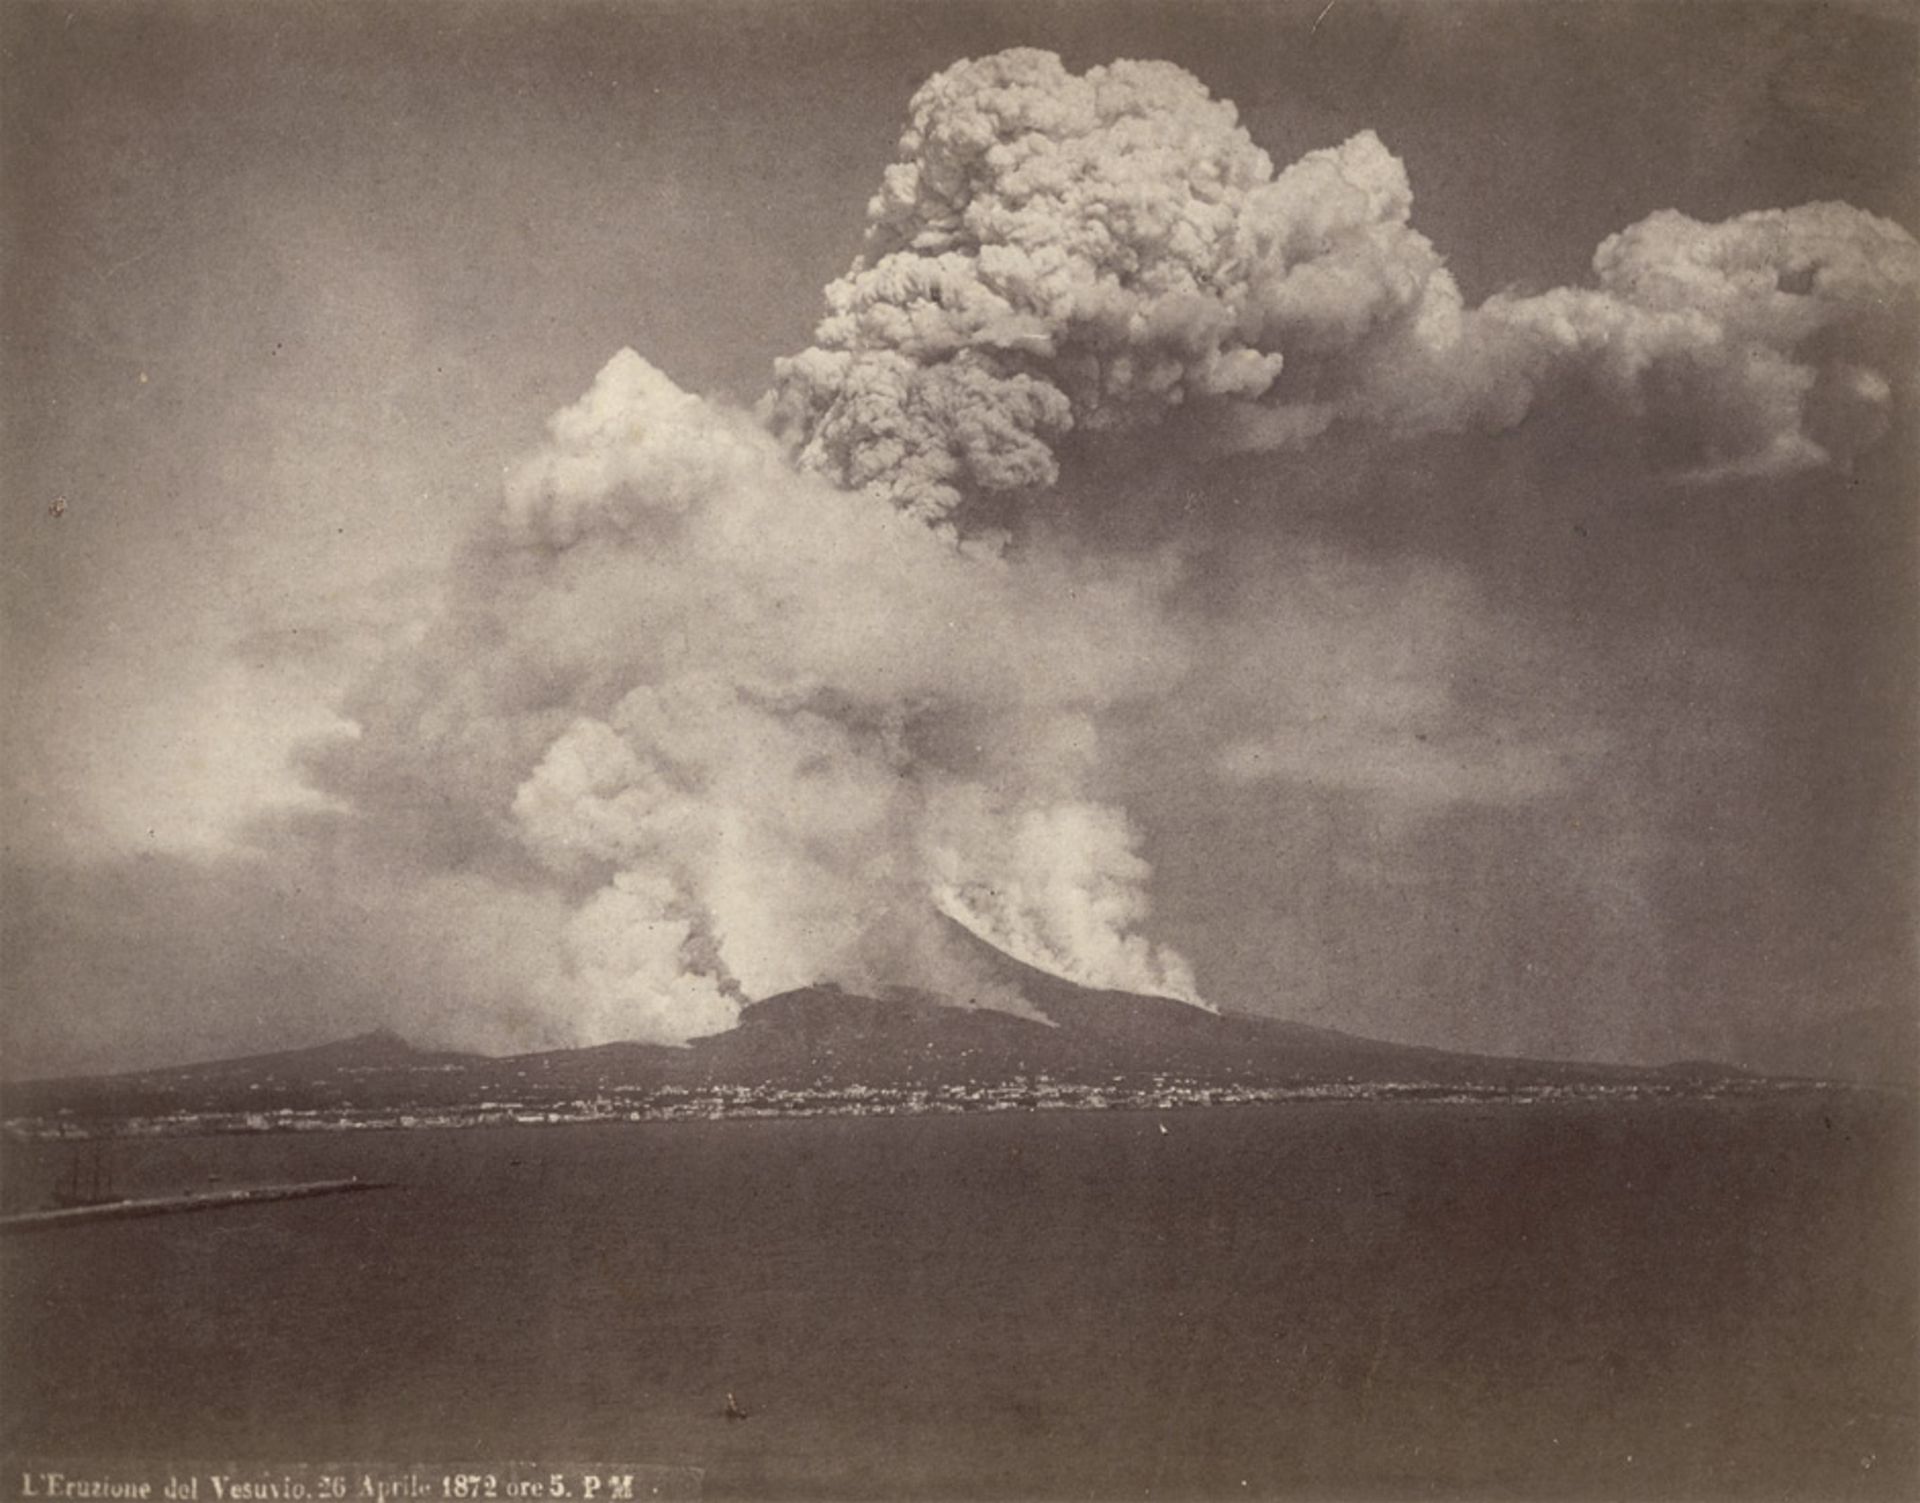 Sommer, Giorgio: View of the Vesuvius eruption 1872View of the Vesuvius eruption April 26, 1872;